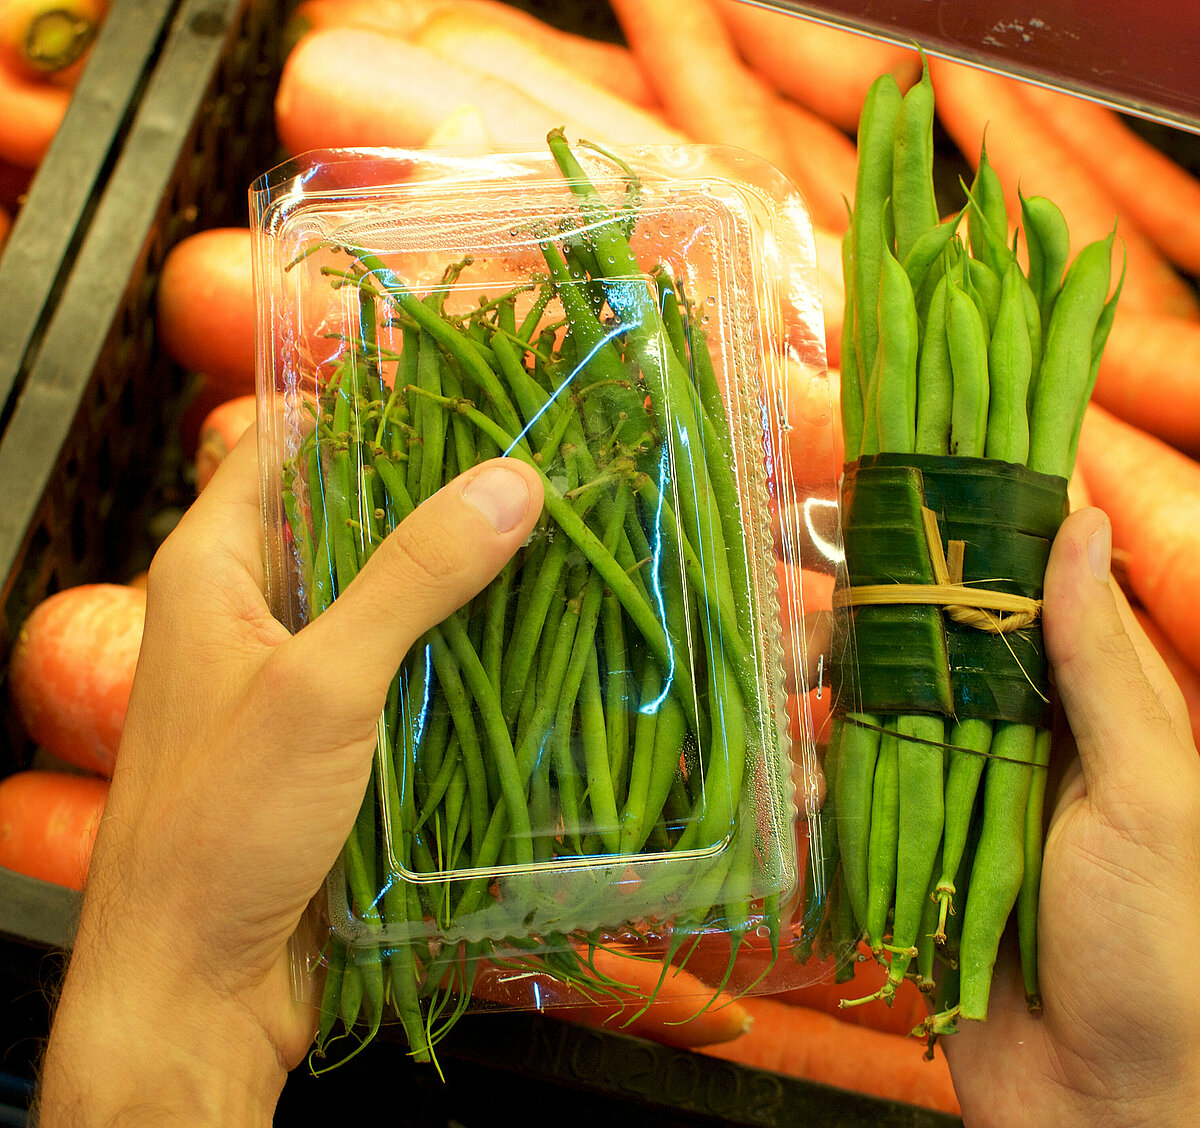 [Translate to French:] Duurzaam groenten verpakken